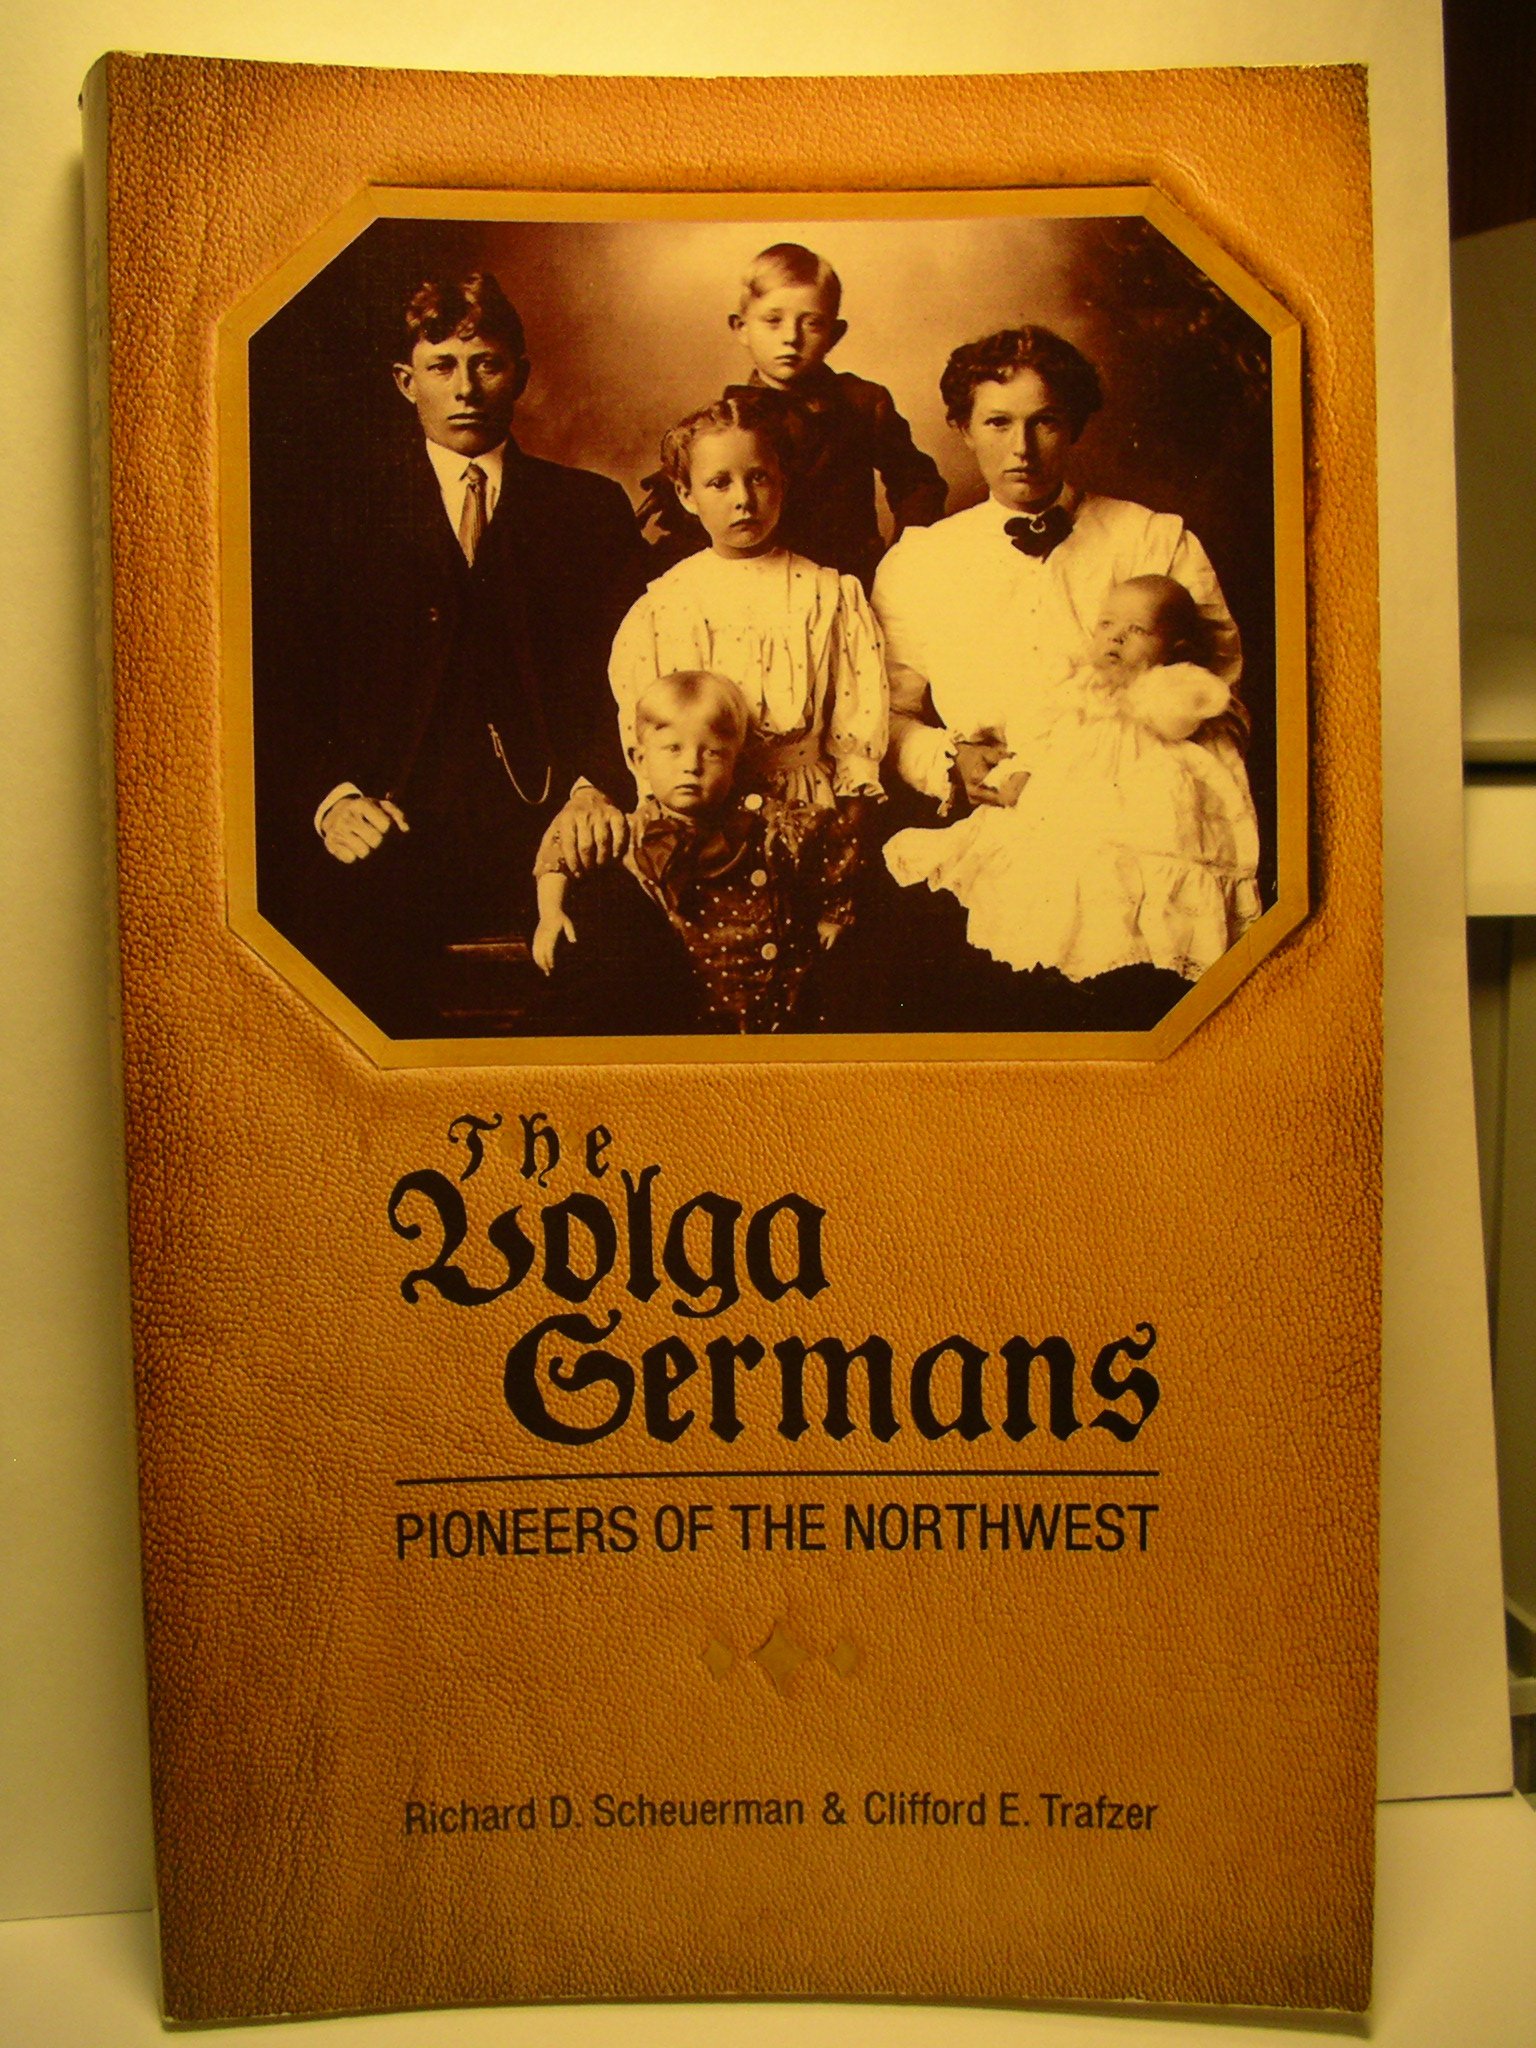 The Volga Germans: Pioneers of the Northwest (book cover)